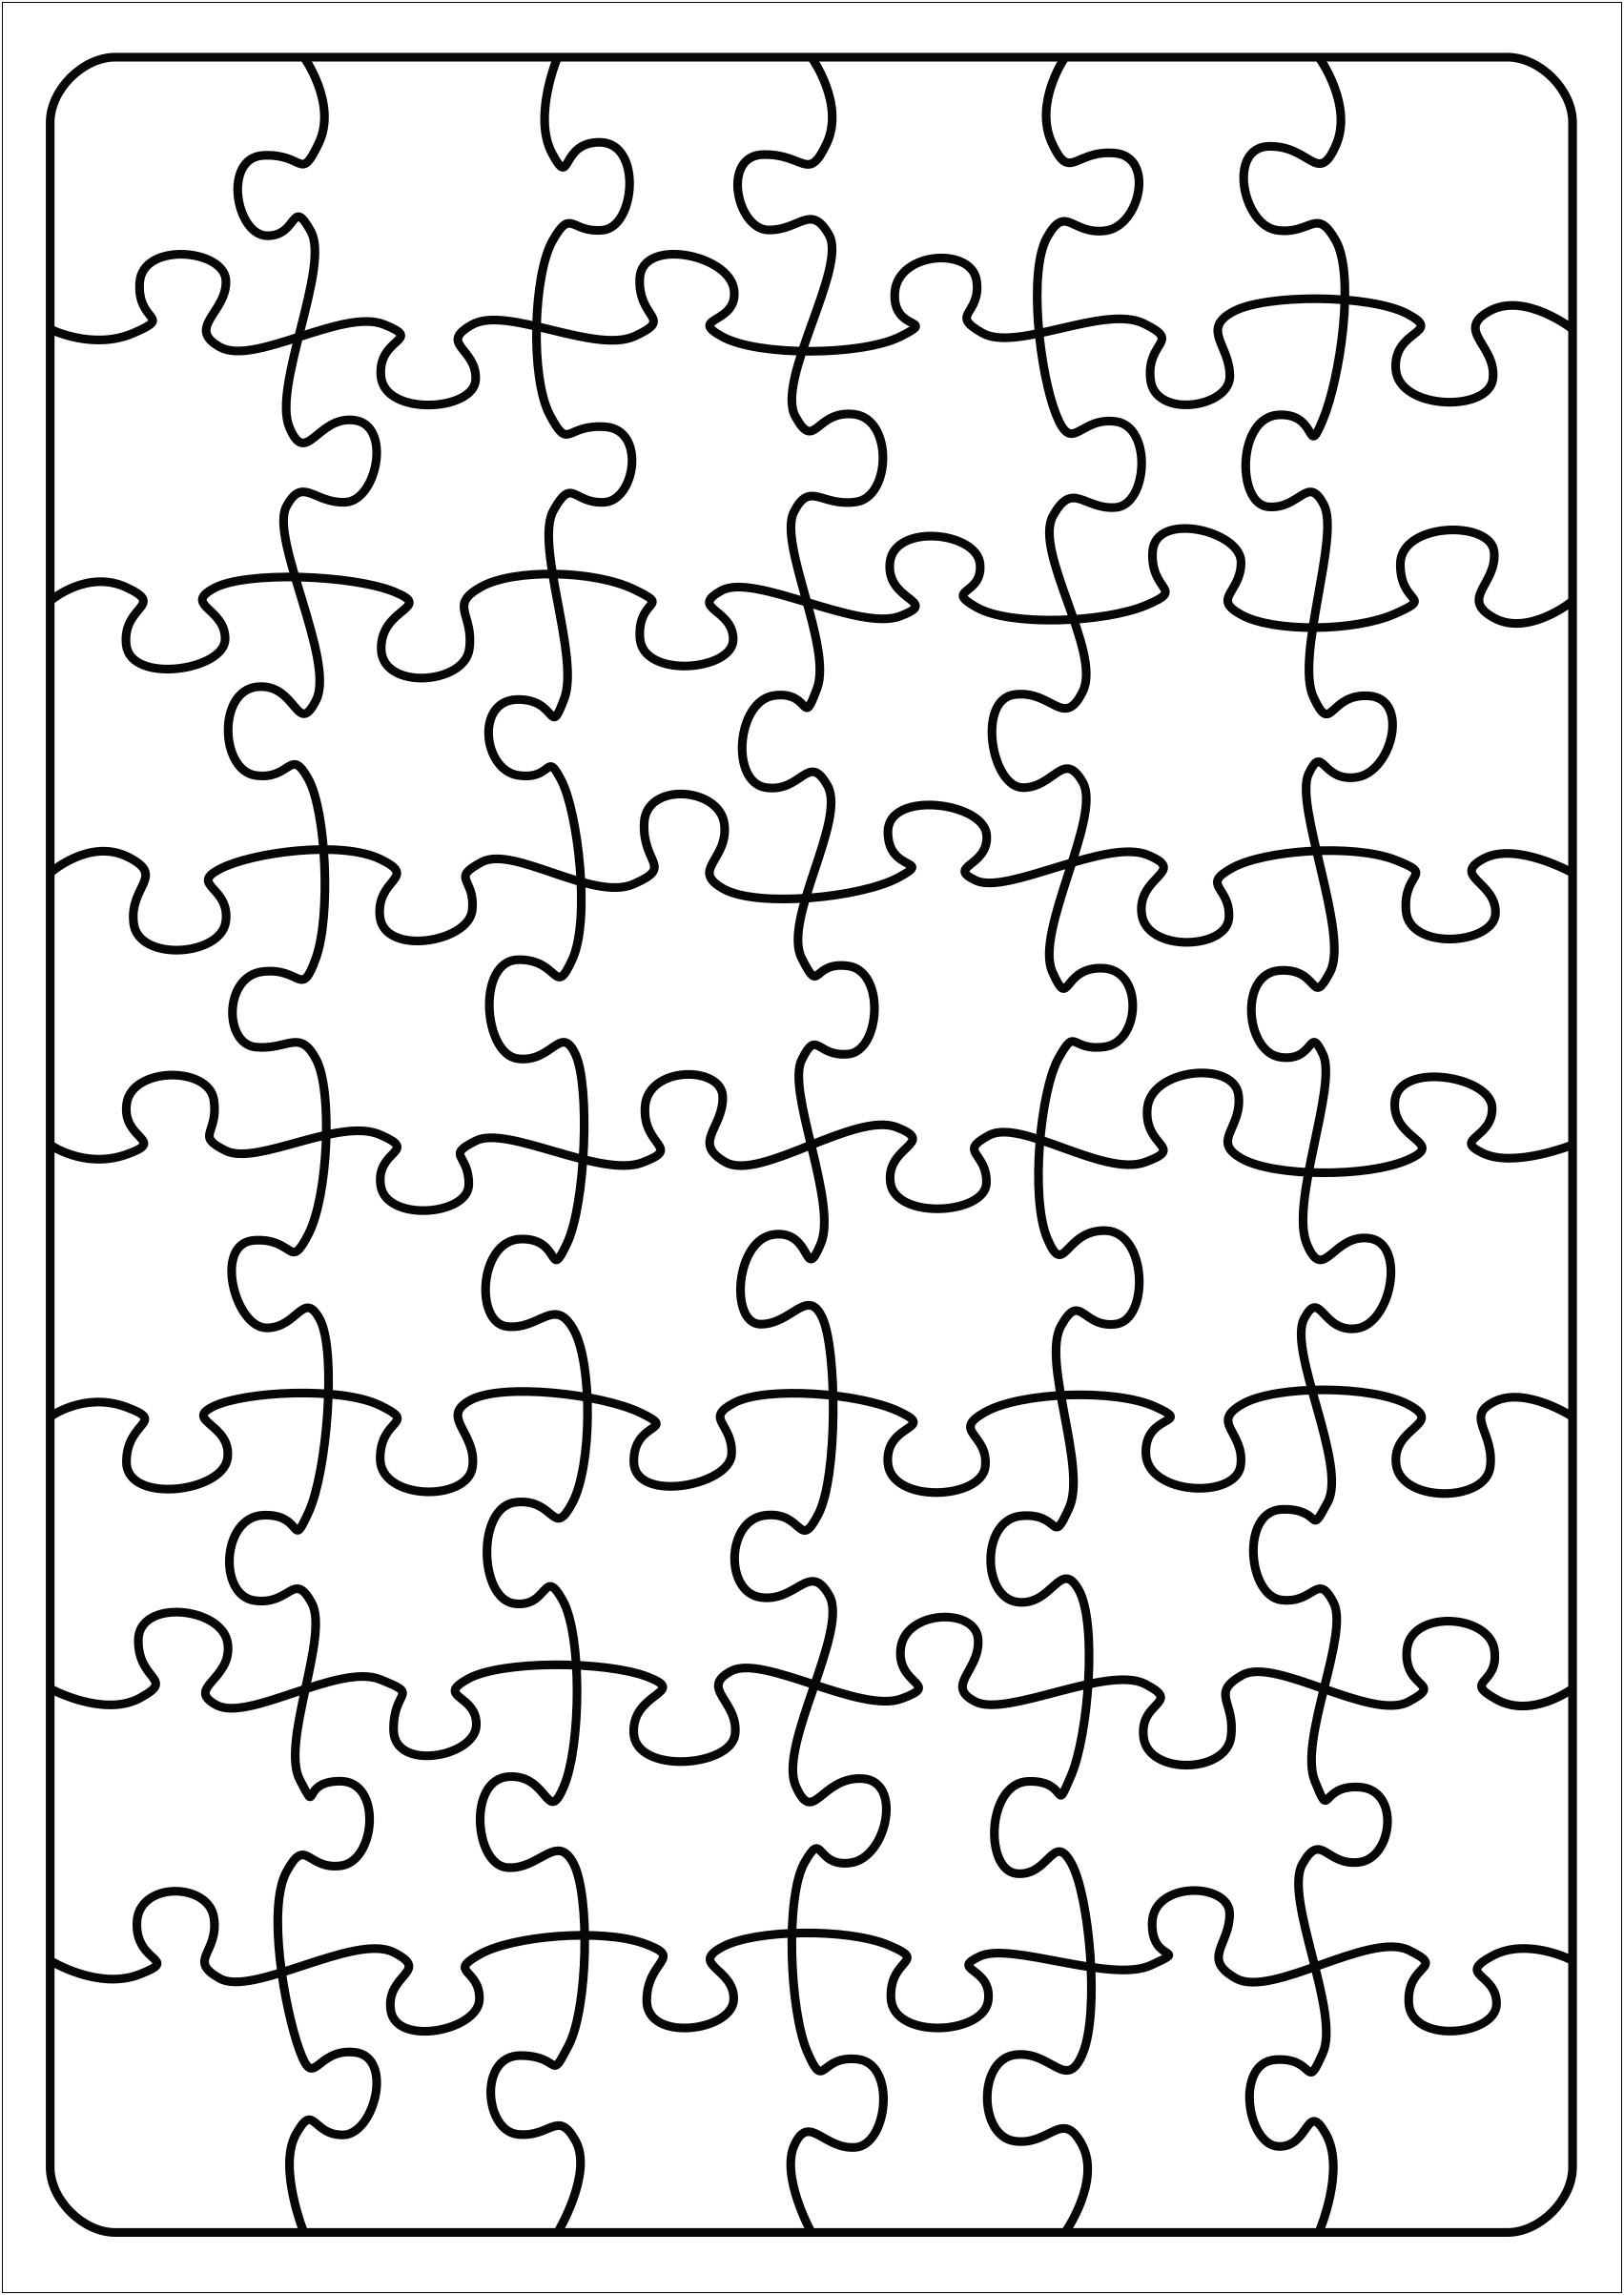 Free Color Puzzle Piece Template 6 Pieces